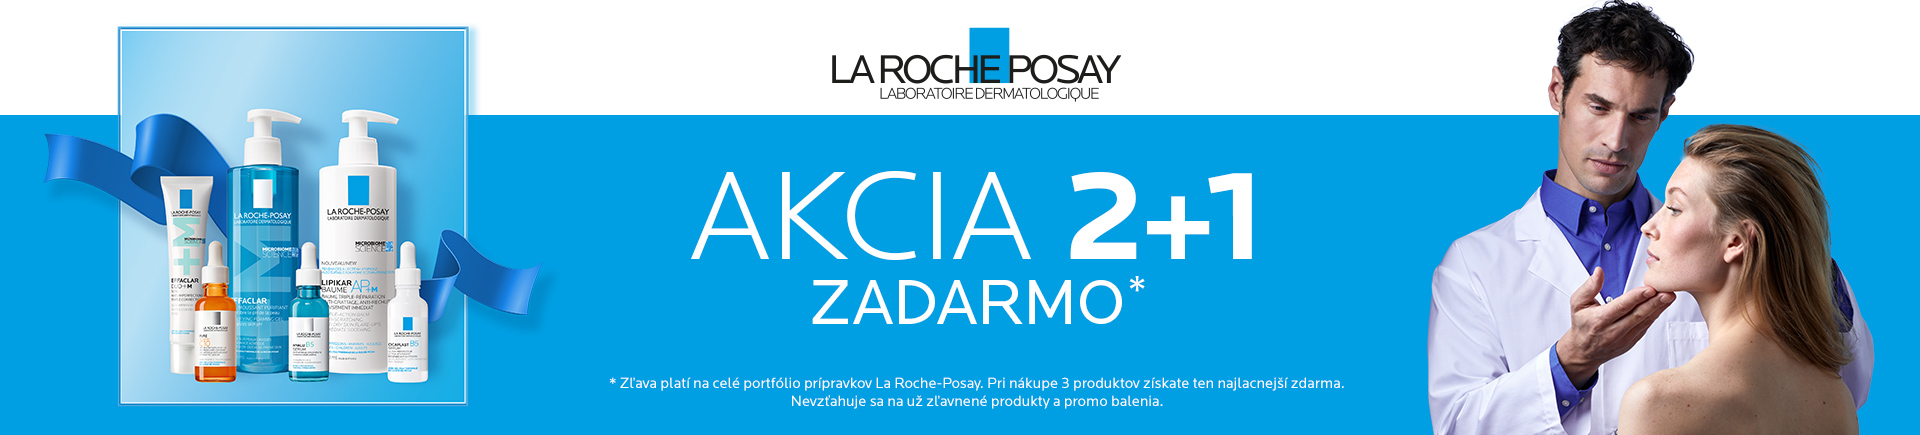 La Roche-Posay 2+1